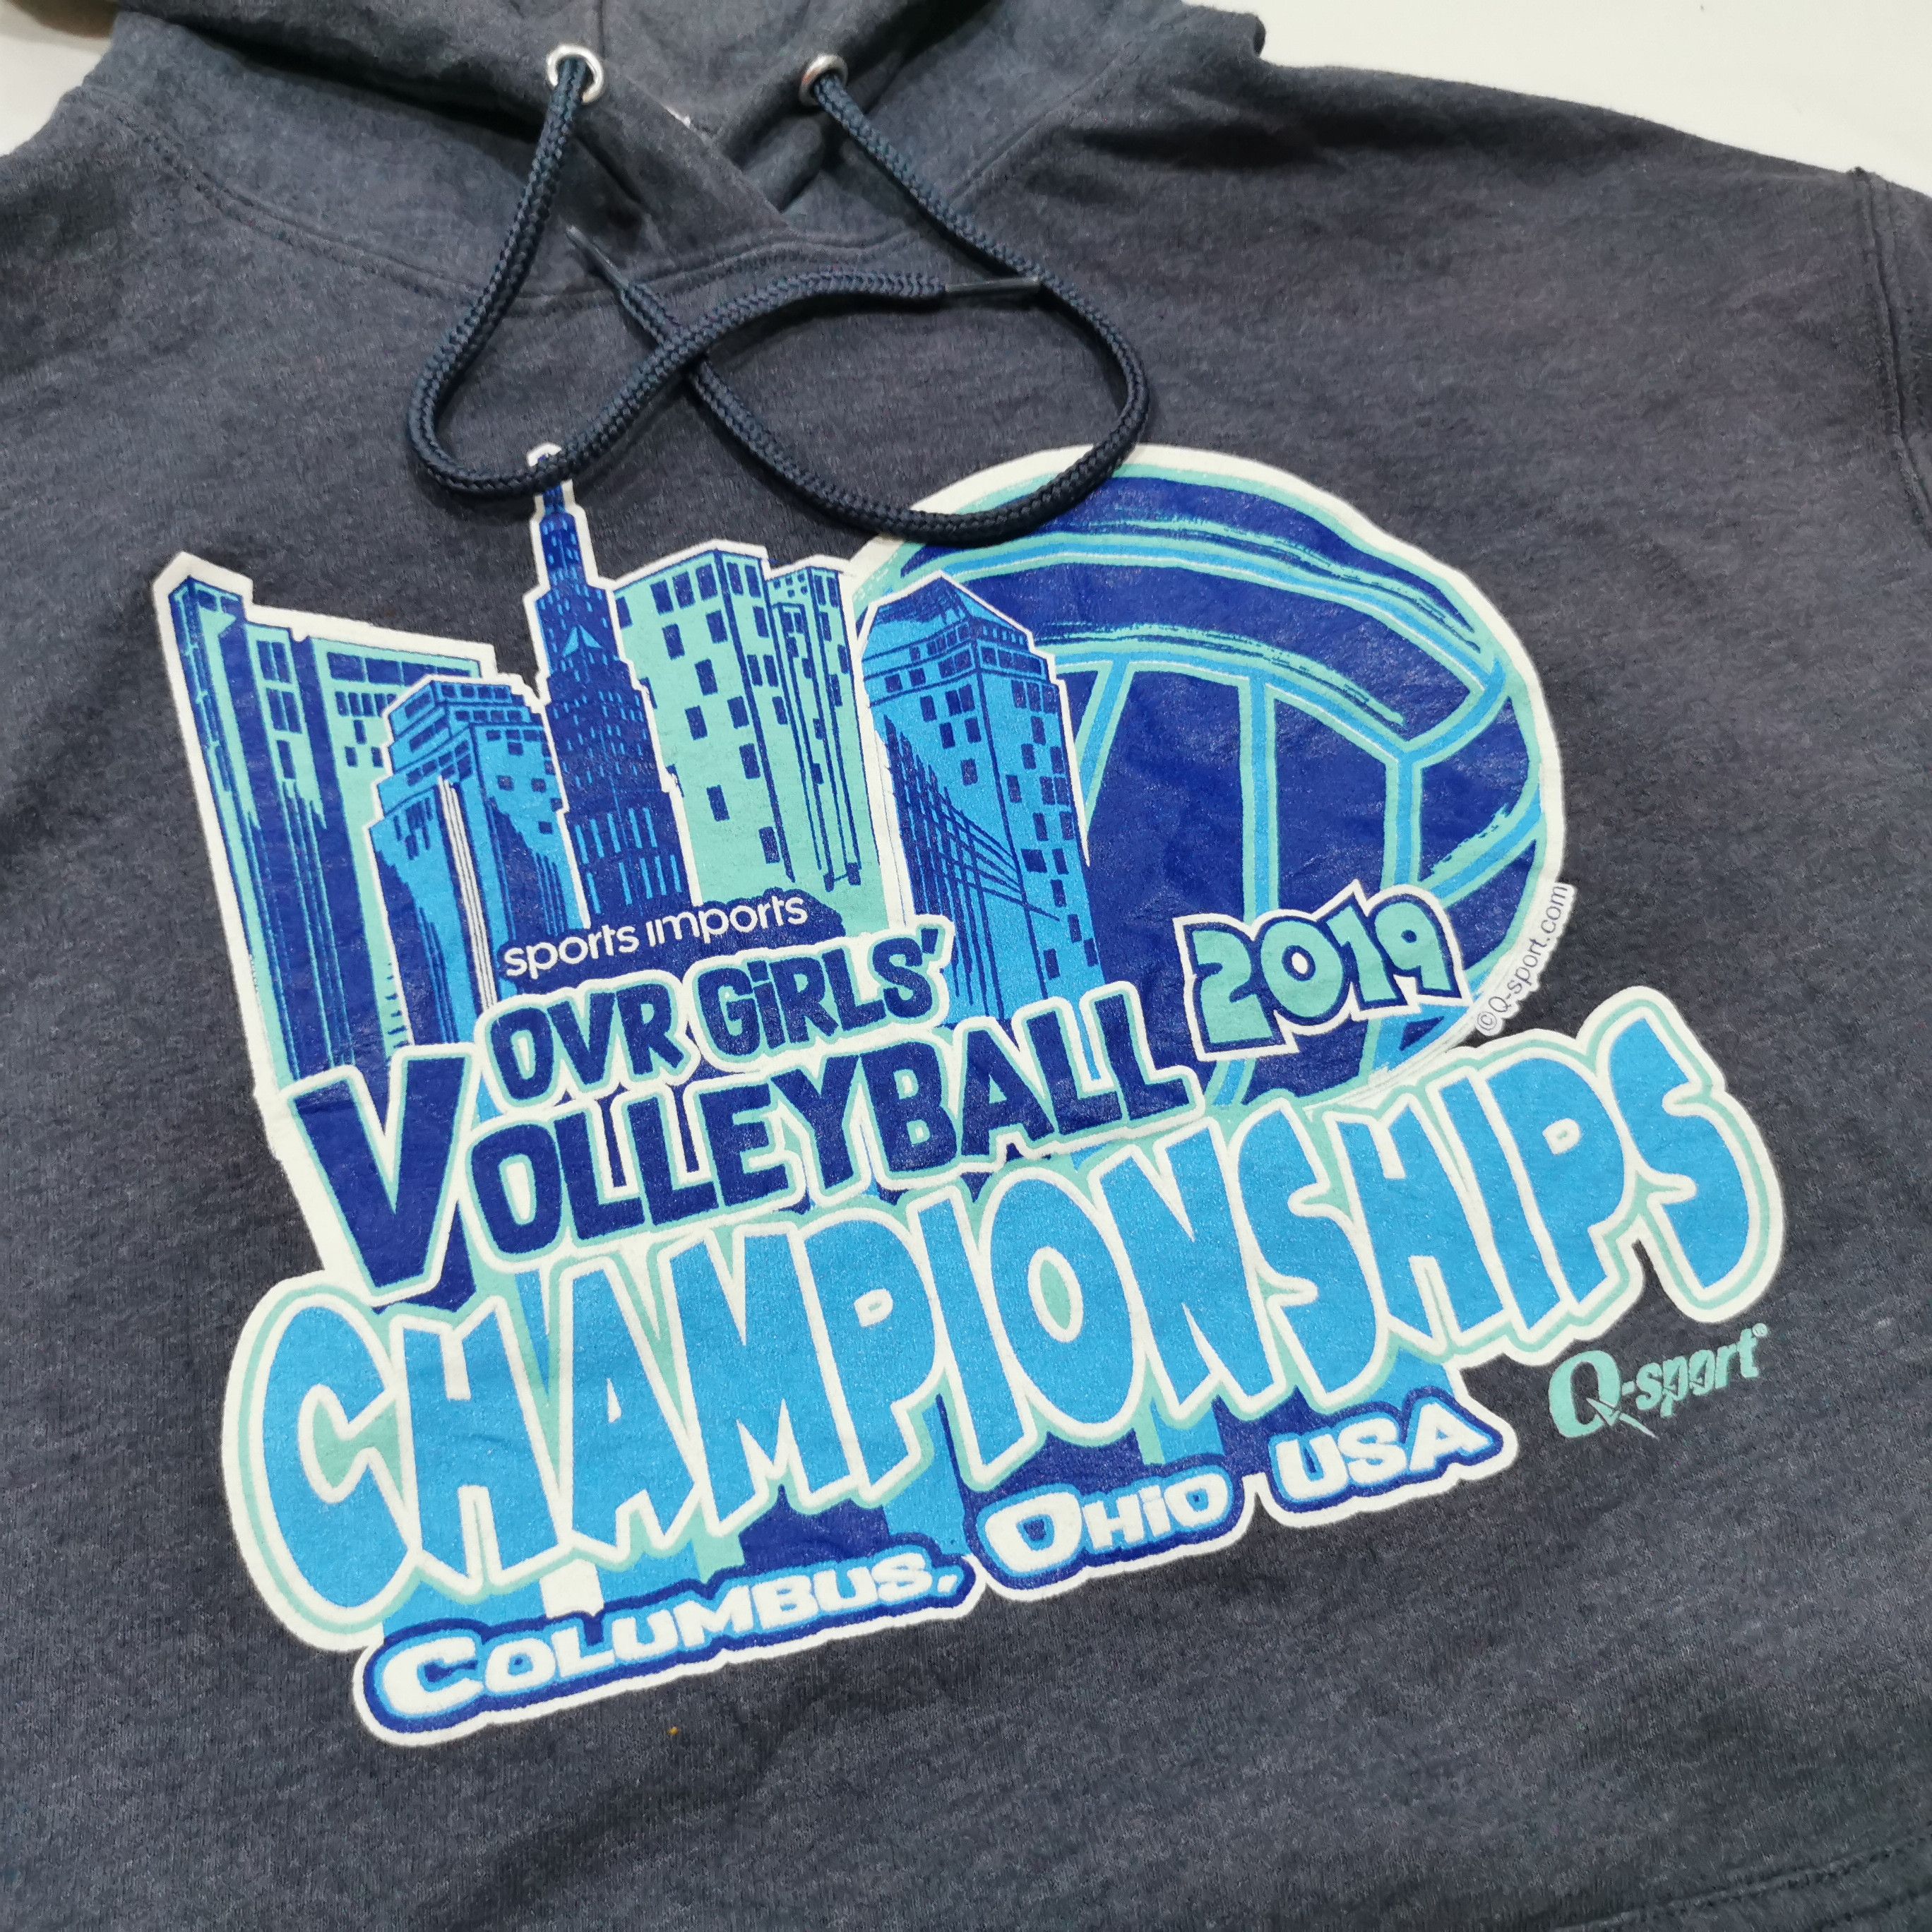 Vintage - OVR Girls' Volleyball 2019 Championships USA Hoodie - 2